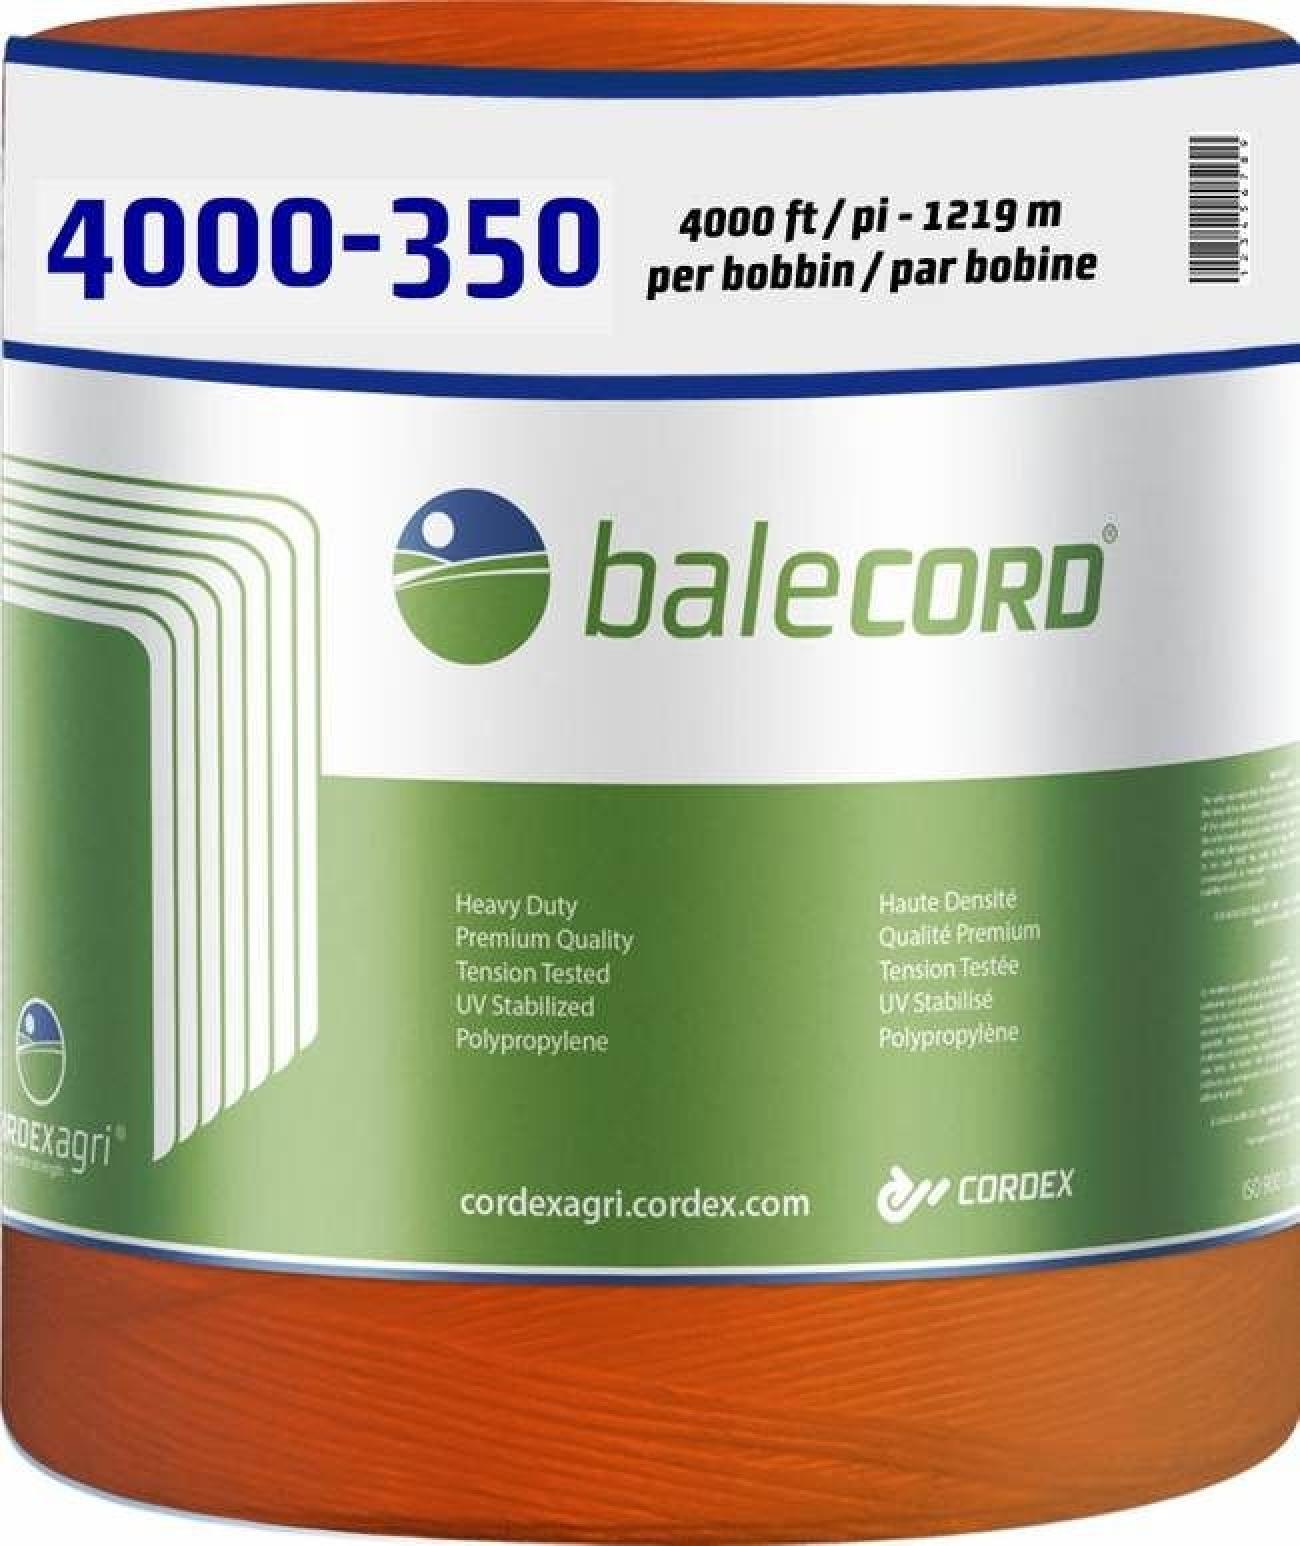 Cordex Balecord 350lb Knot Strength Orange Baler Twine